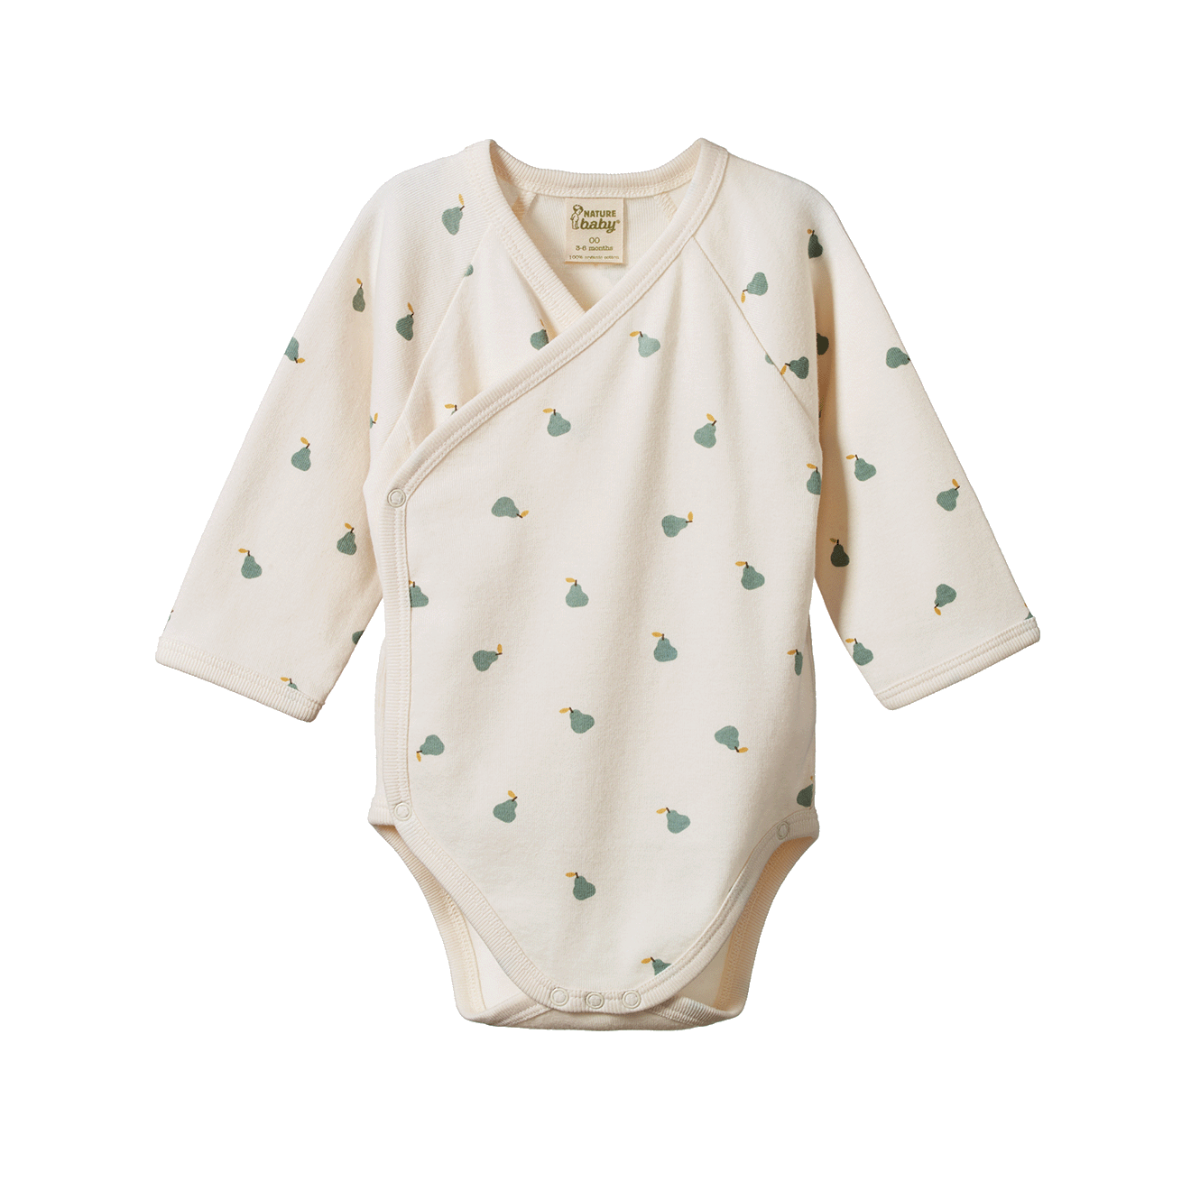 Kimono Bodysuit - Petite Pear by Nature Baby